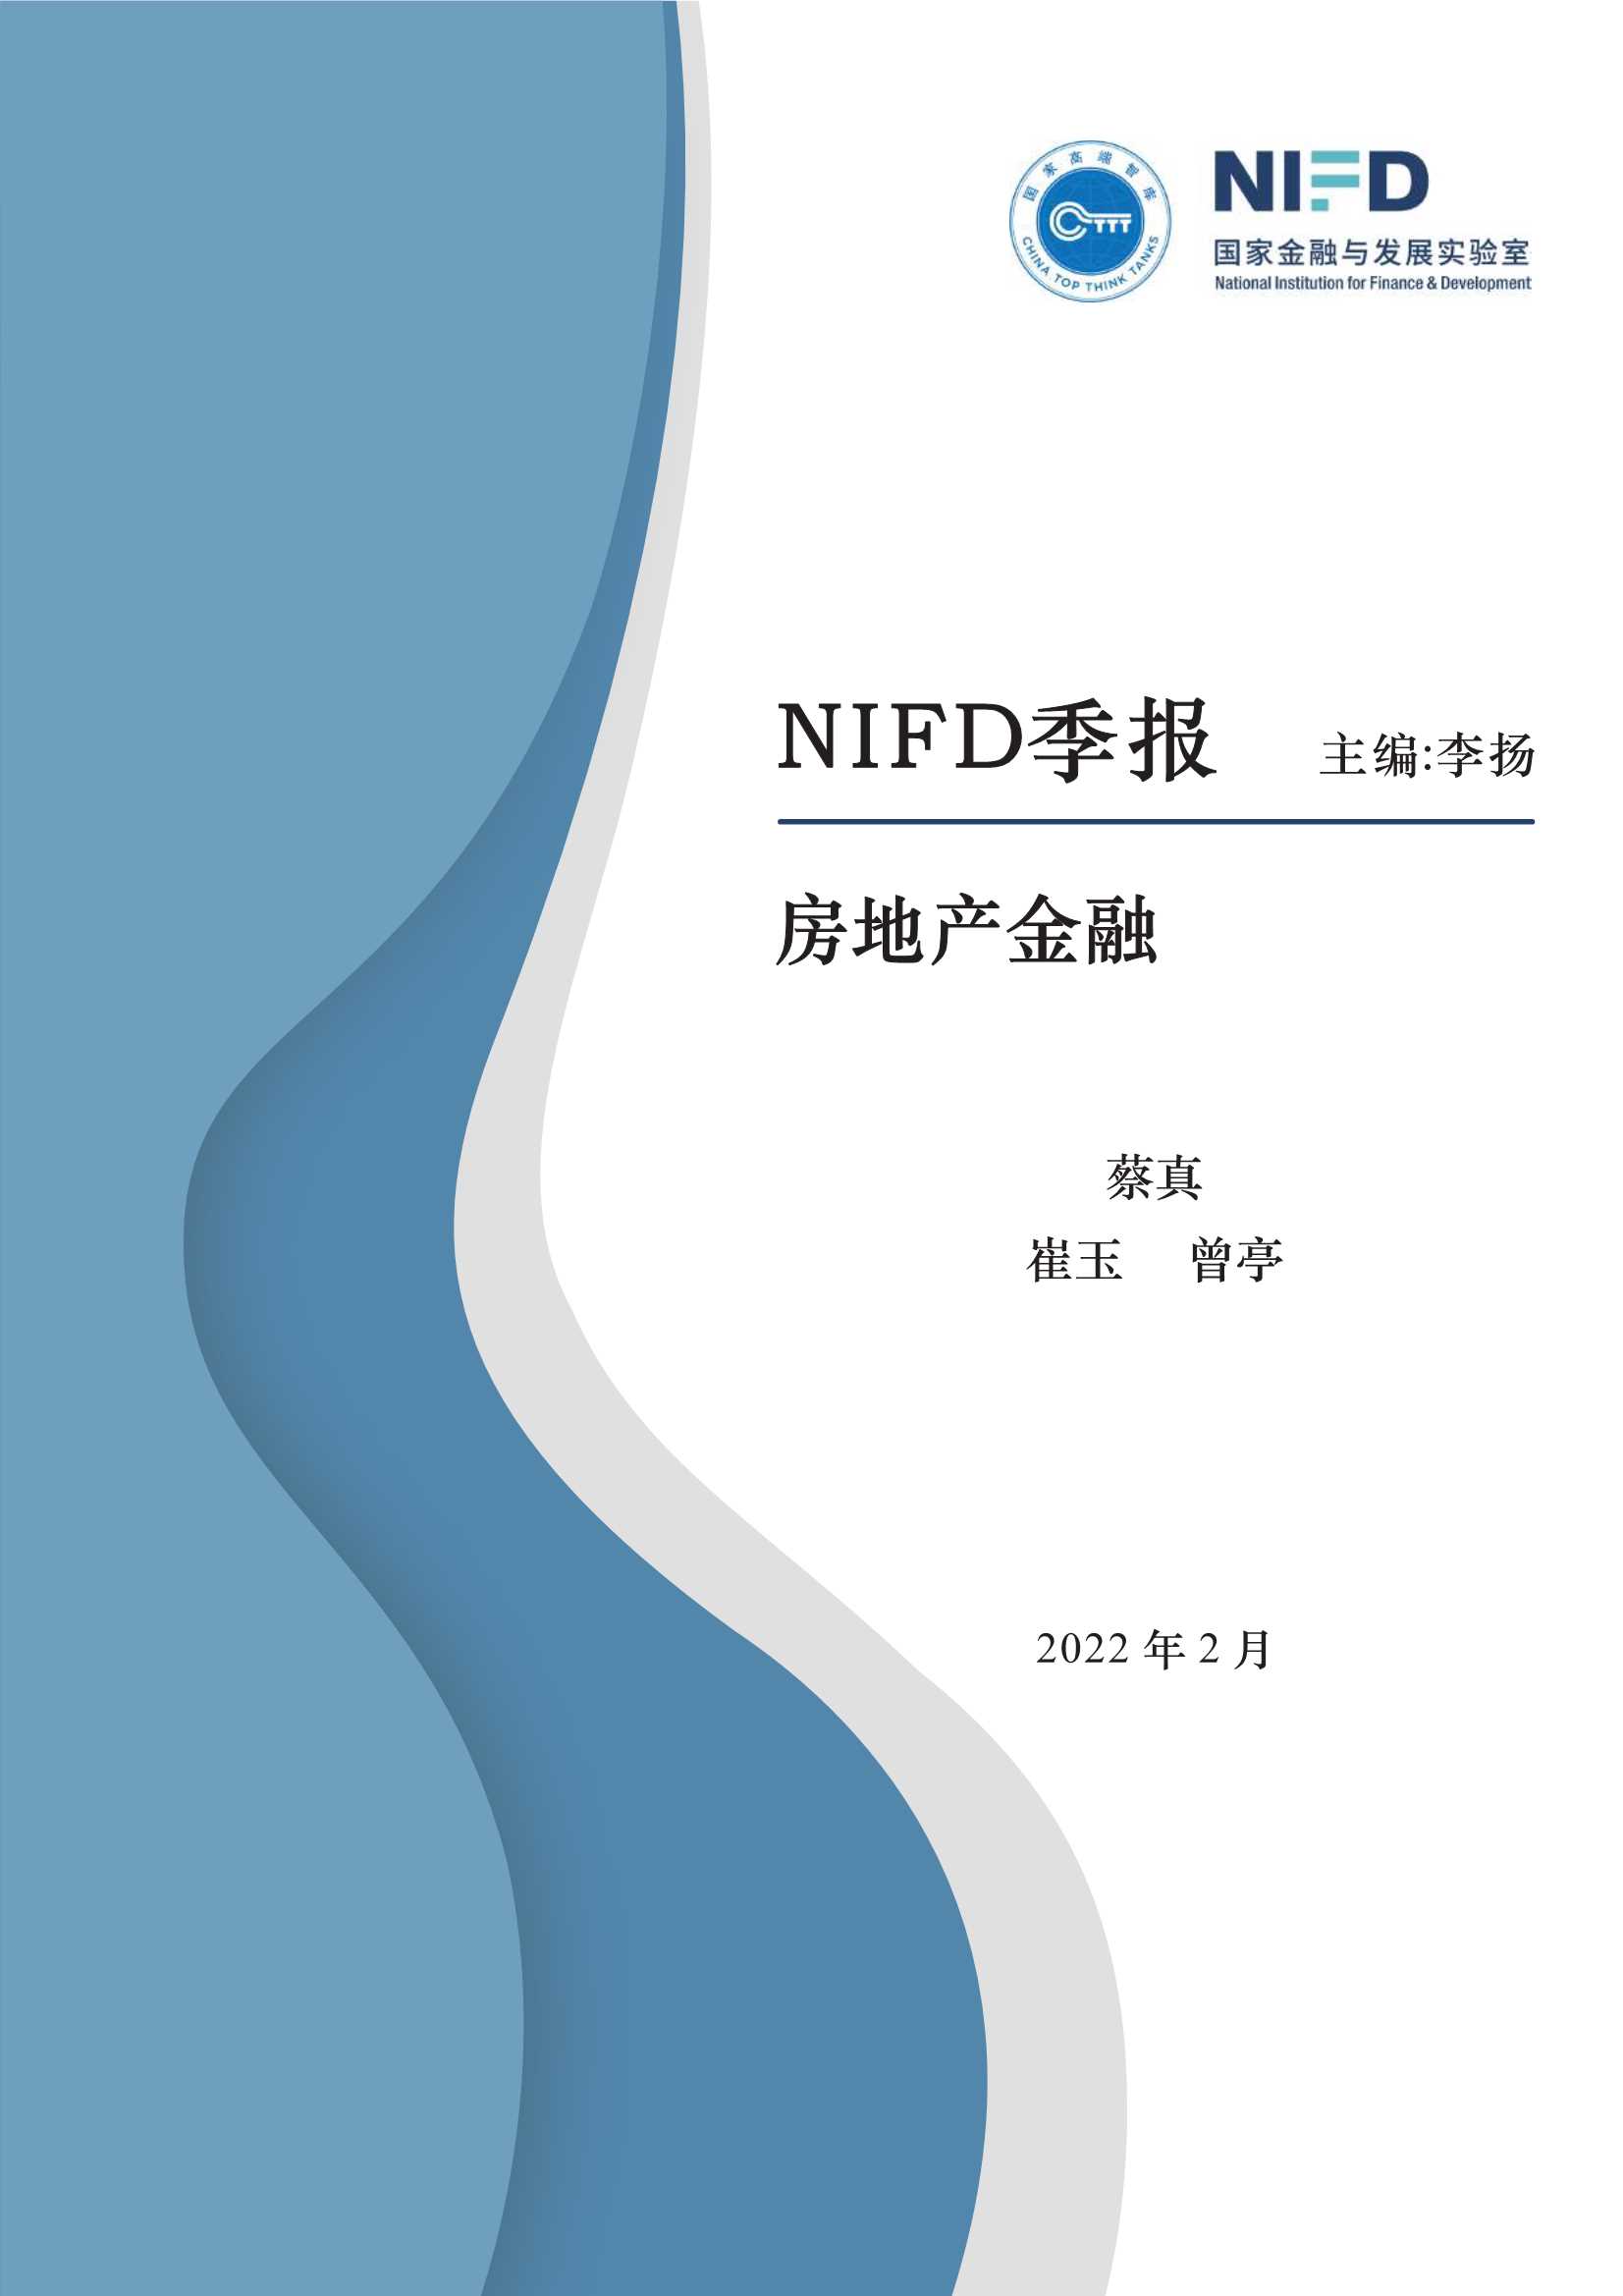 NIFD-2021年房地产市场及房地产金融运行分析与2022年展望-2022.03-20页